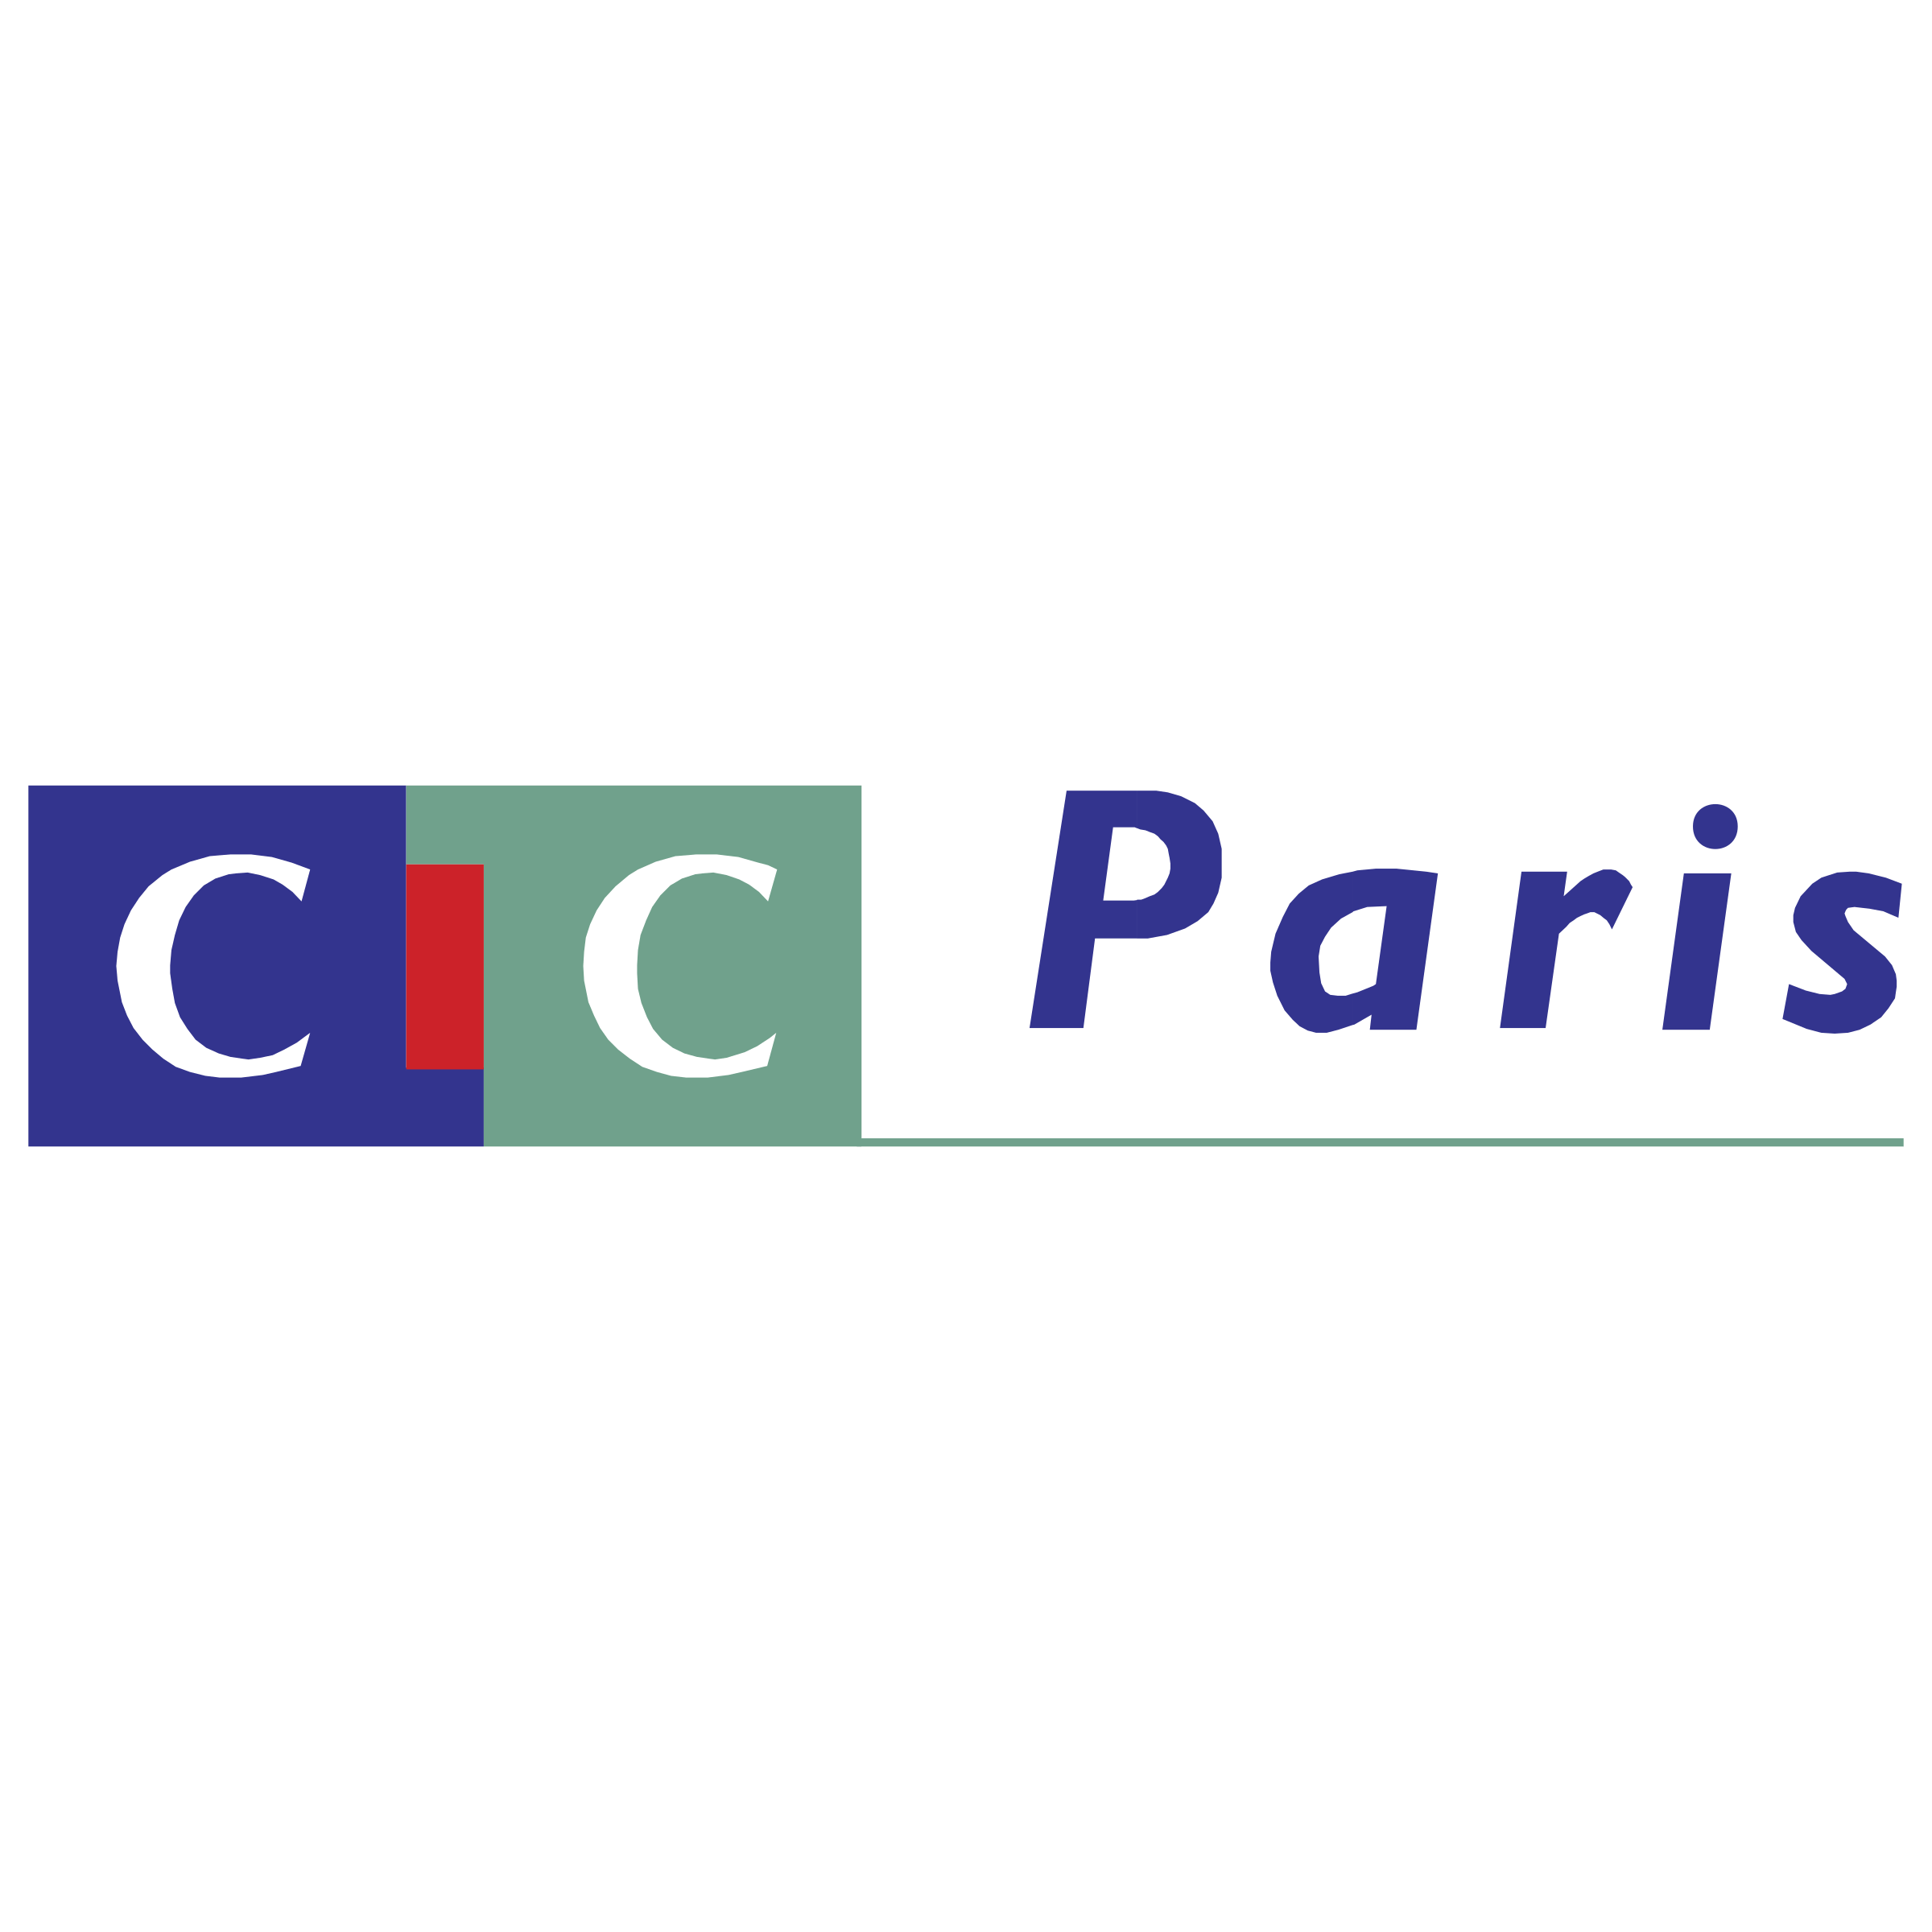 CIC Logo - CIC Paris Logo PNG Transparent & SVG Vector - Freebie Supply